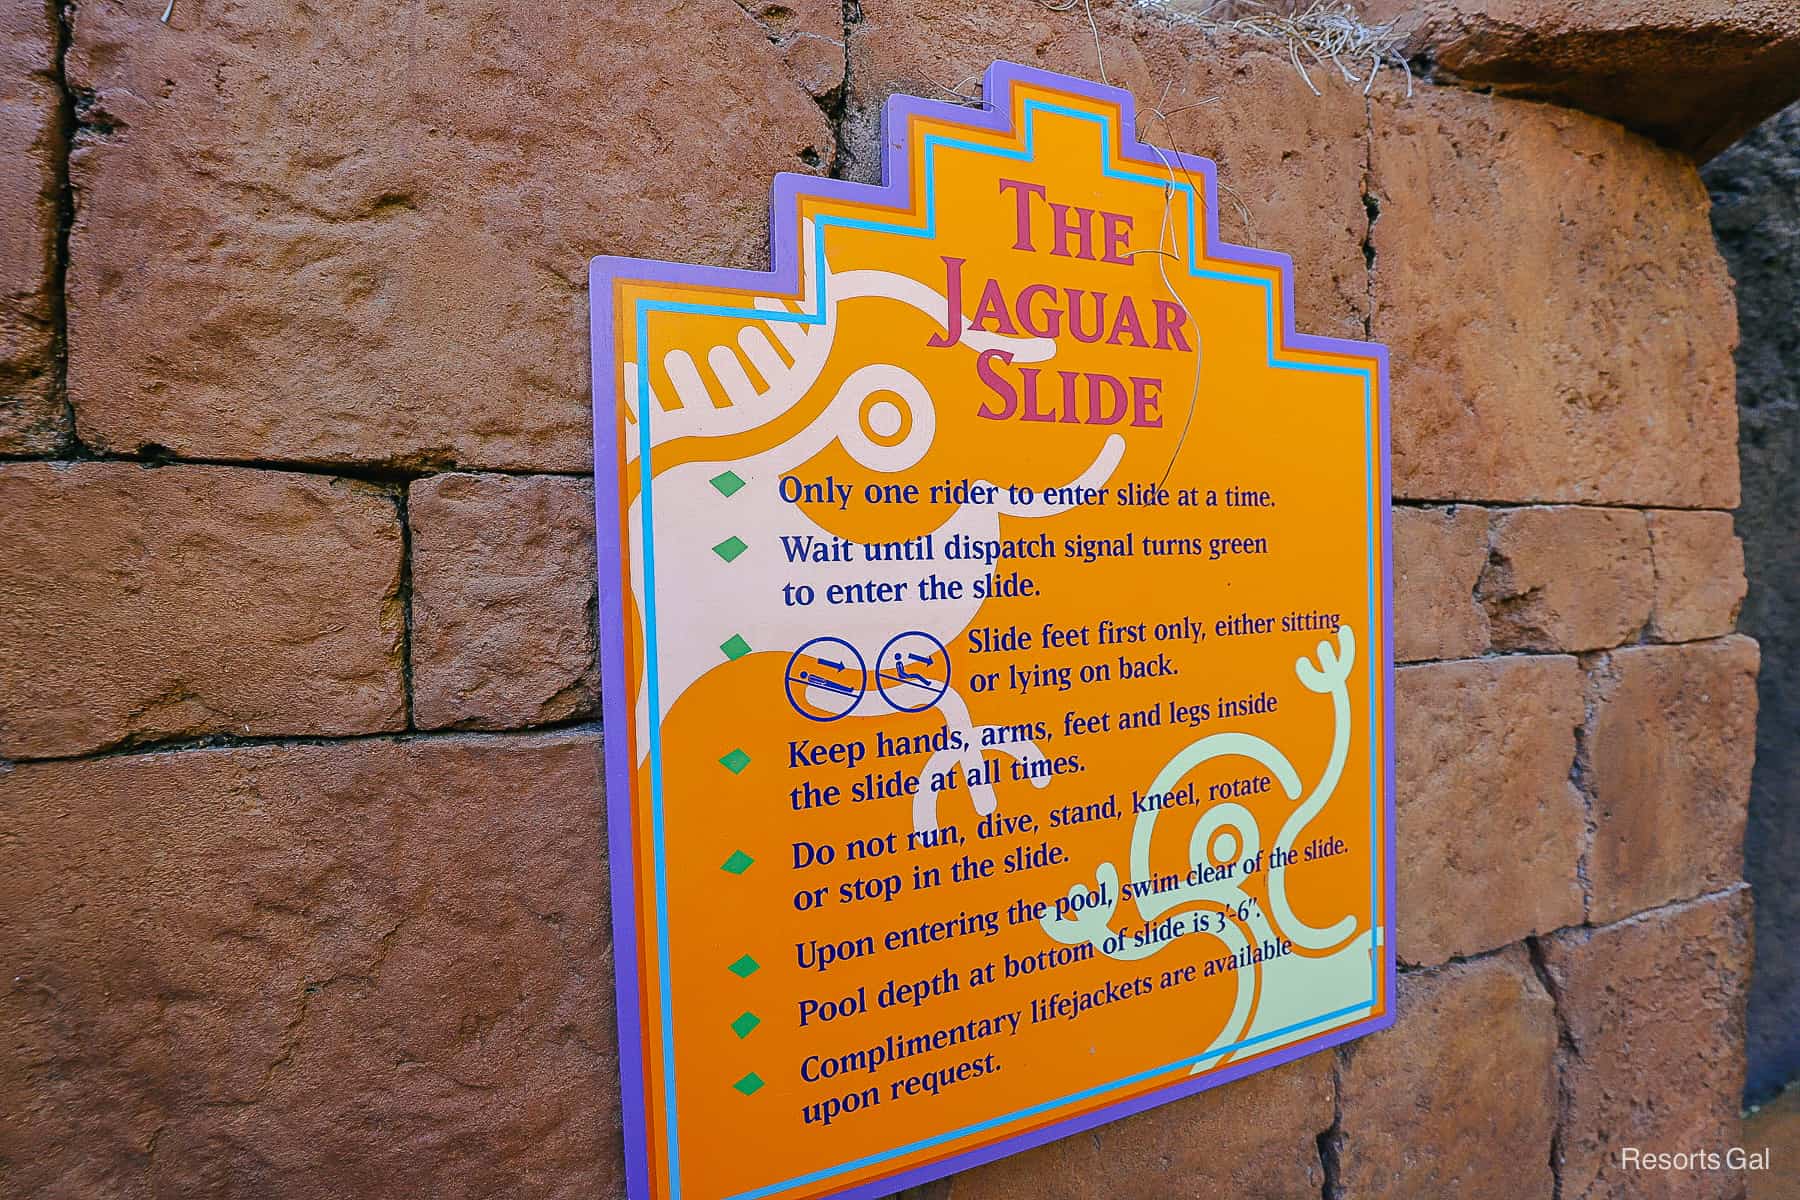 Posted rules for the Jaguar Slide at Coronado Springs 